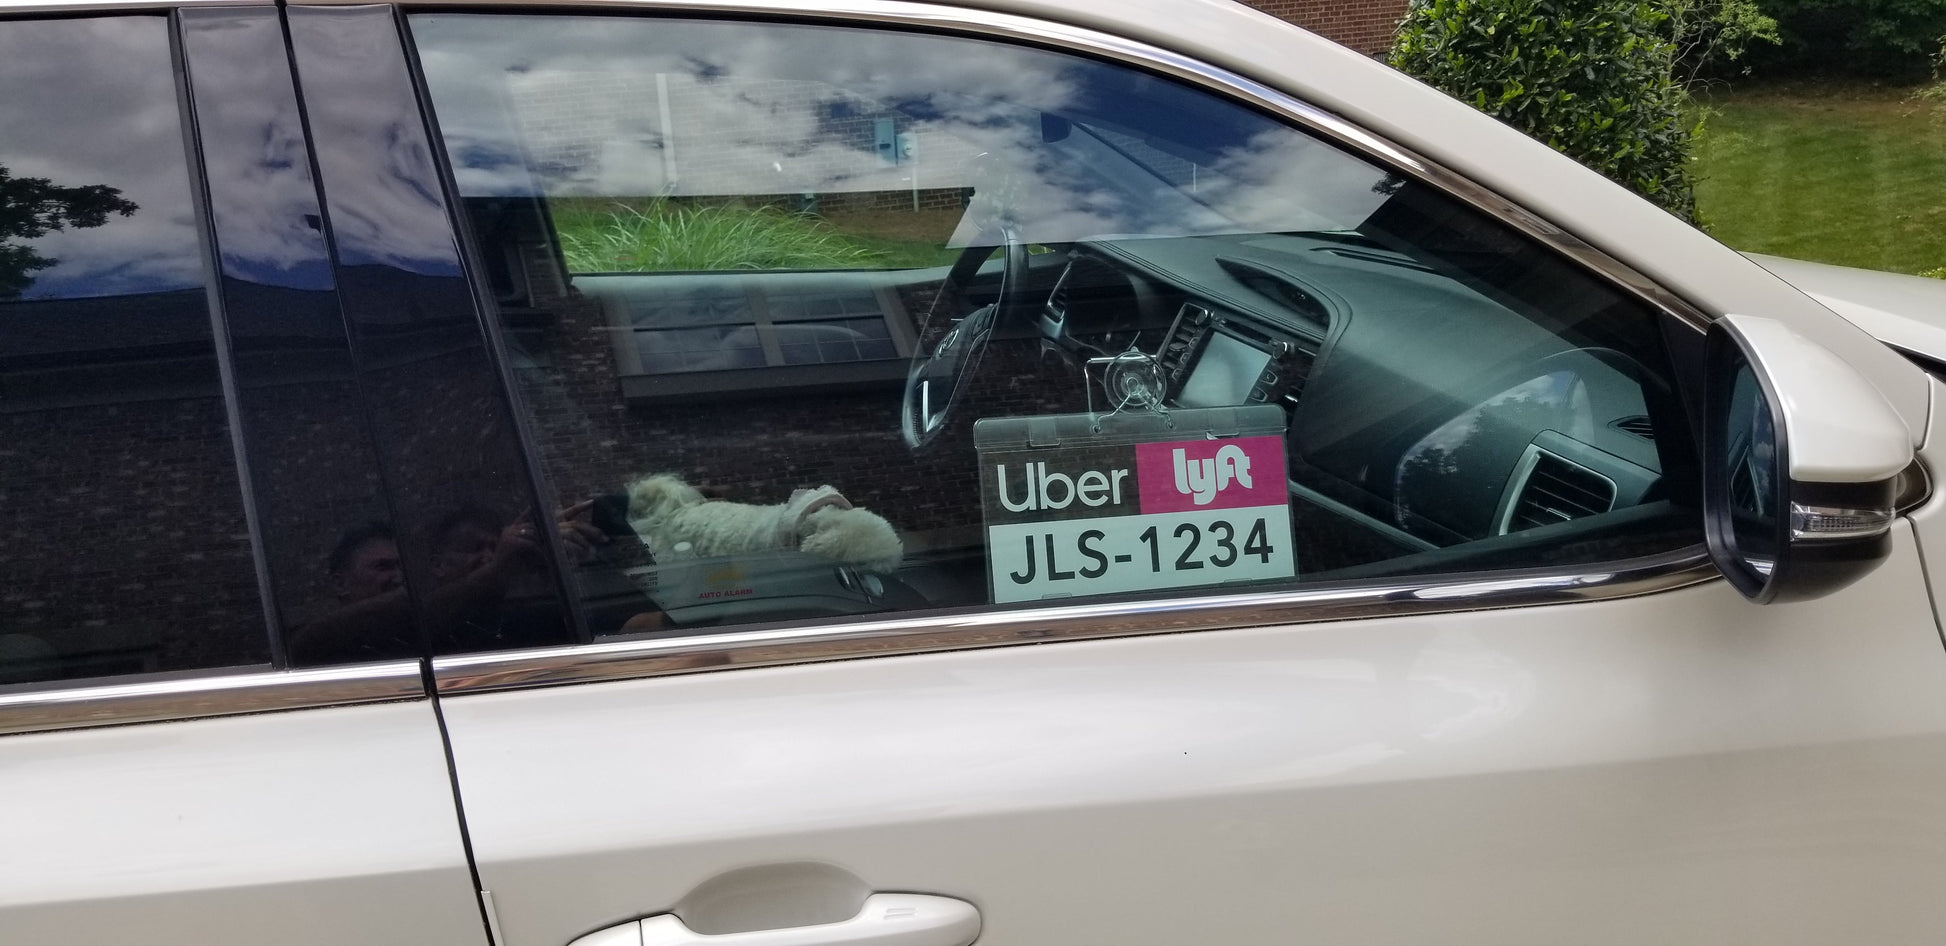 Uber and Lyft emblem holder display on passenger side window. Uber Lyft logo and license plate number and driver name